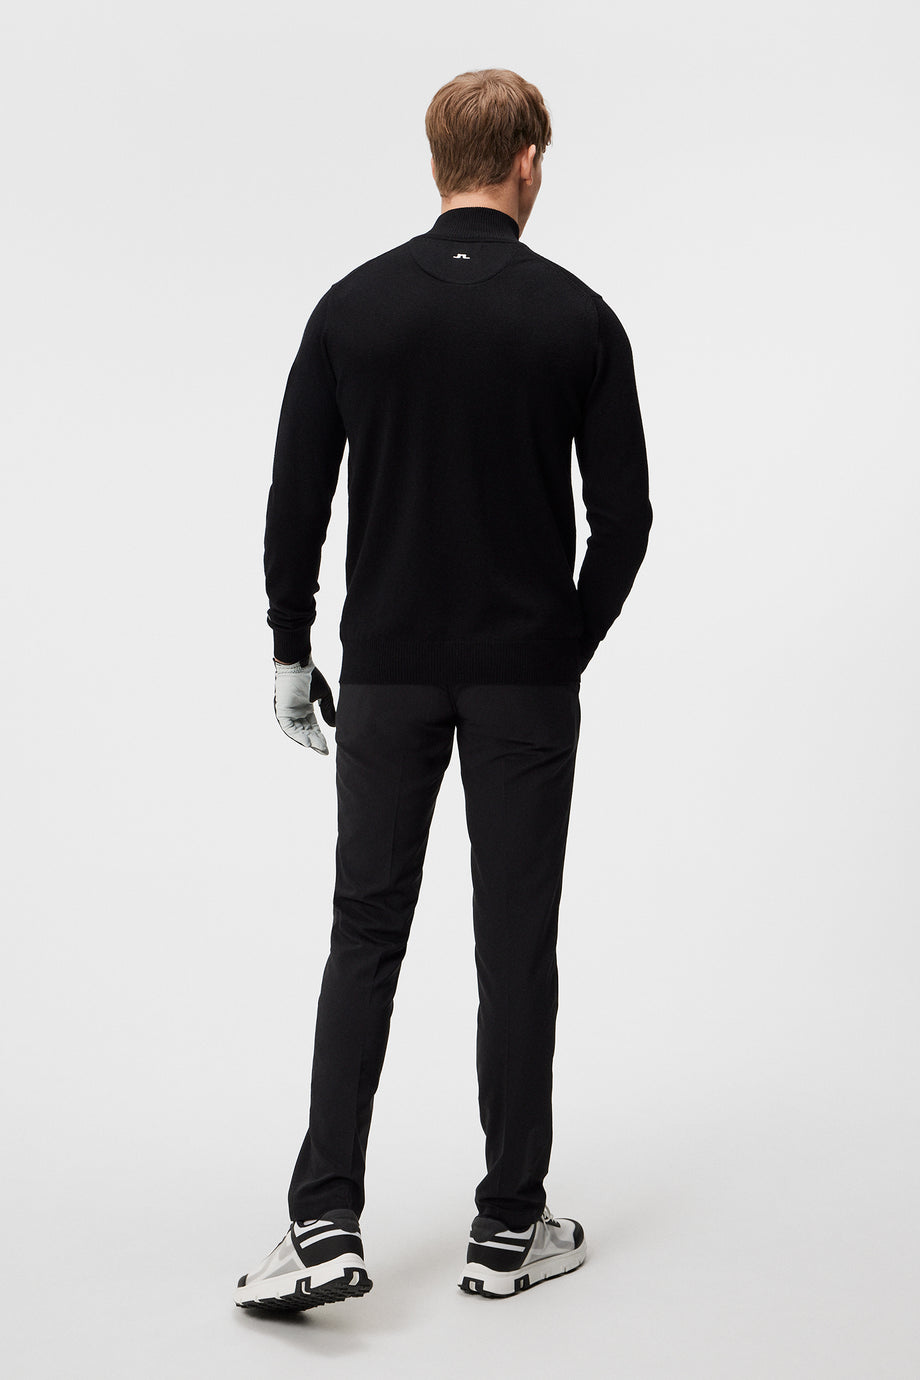 Kian Knitted Sweater / Black